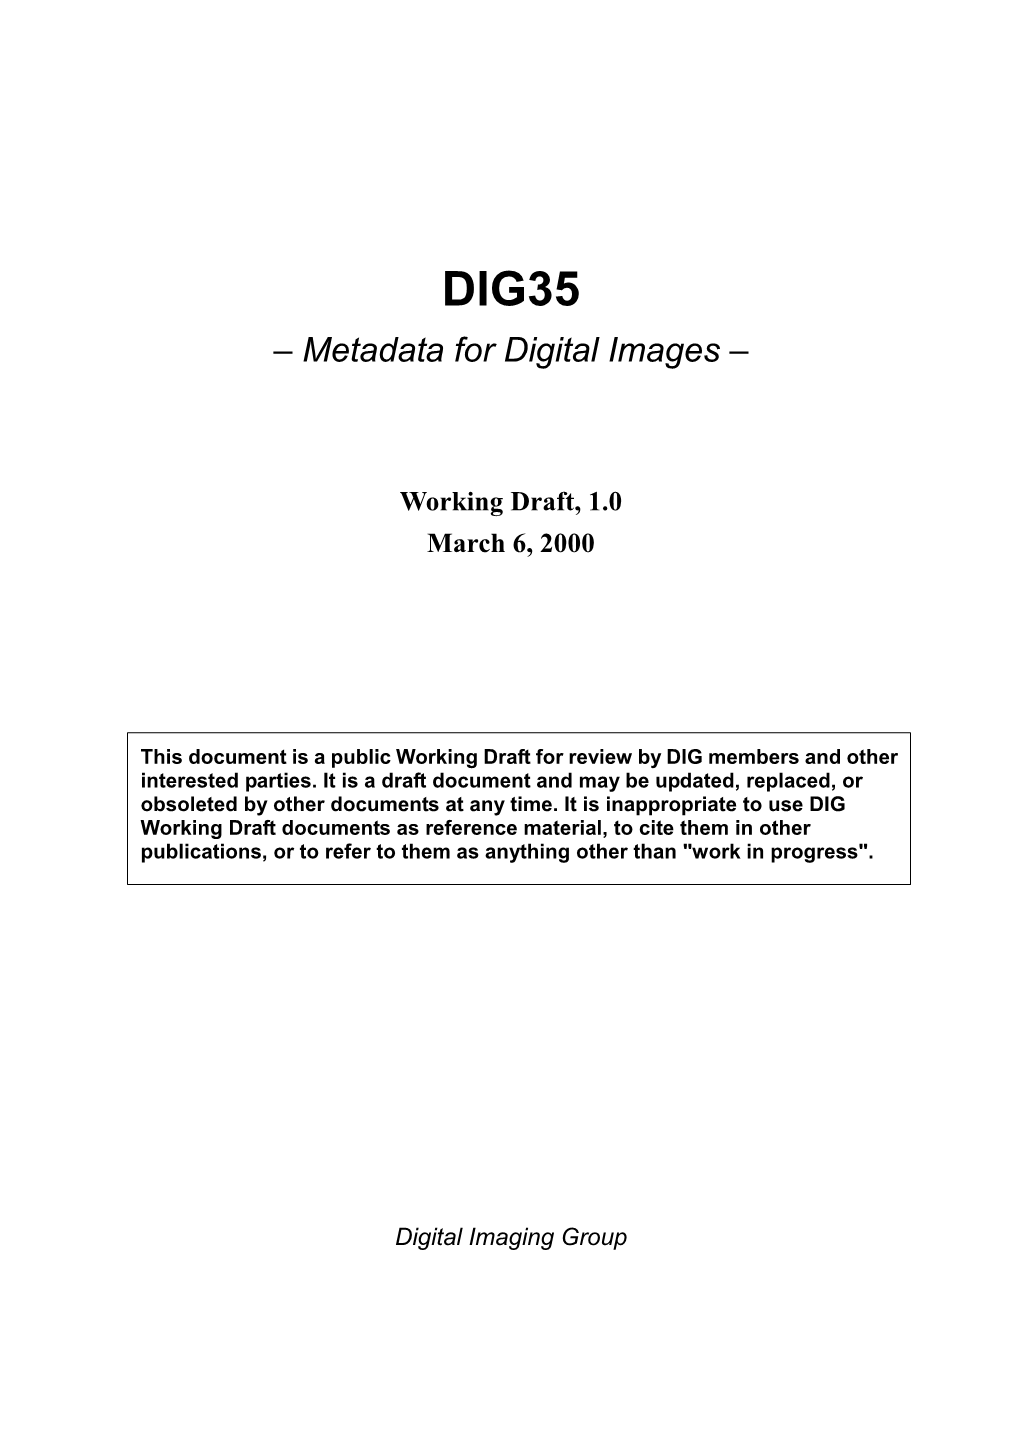 DIG35 Working Draft